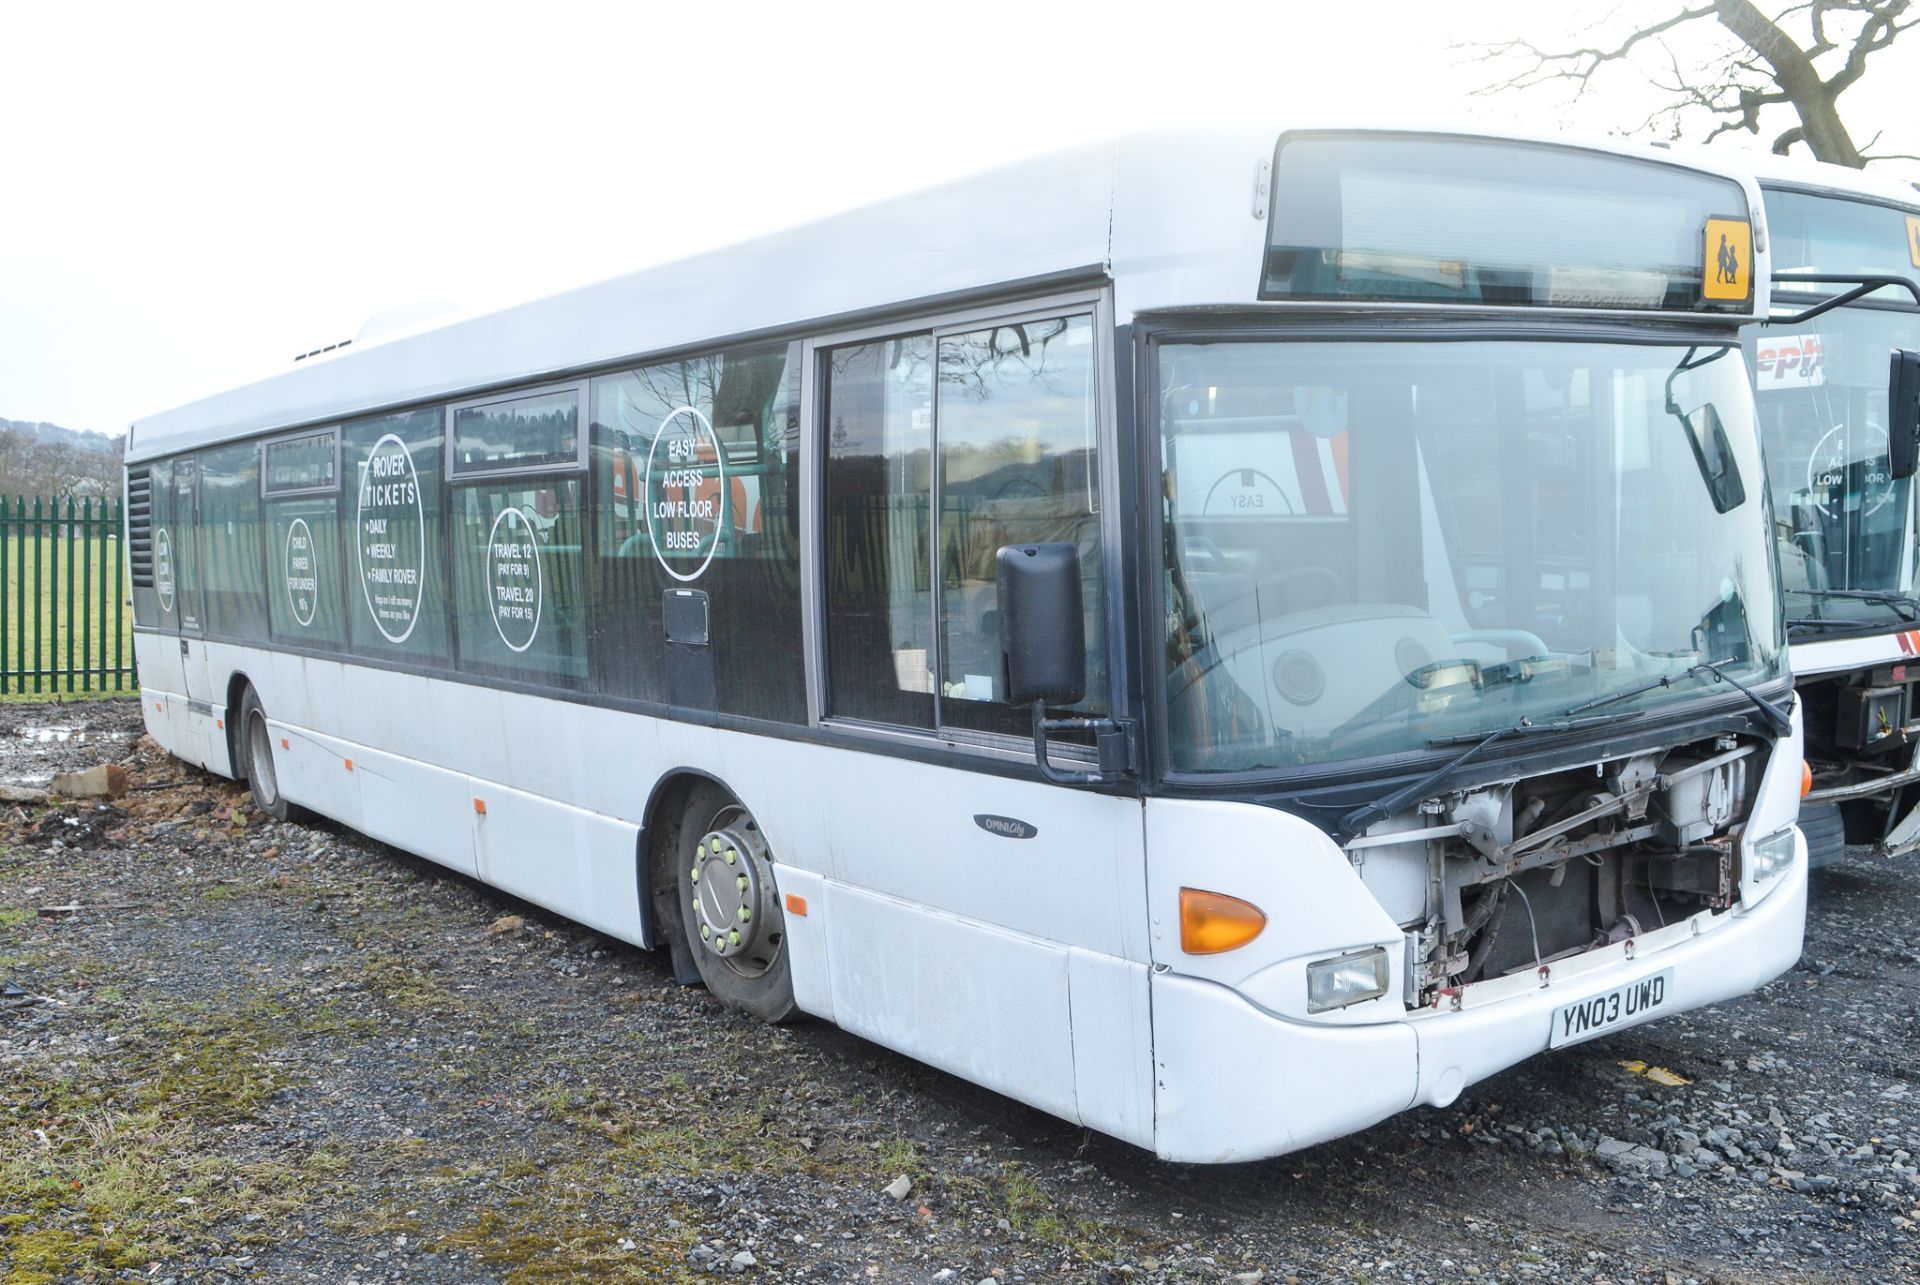 Scania 42 seat single deck service bus Registration Number: YN03 UWD Date of Registration: 10/04/